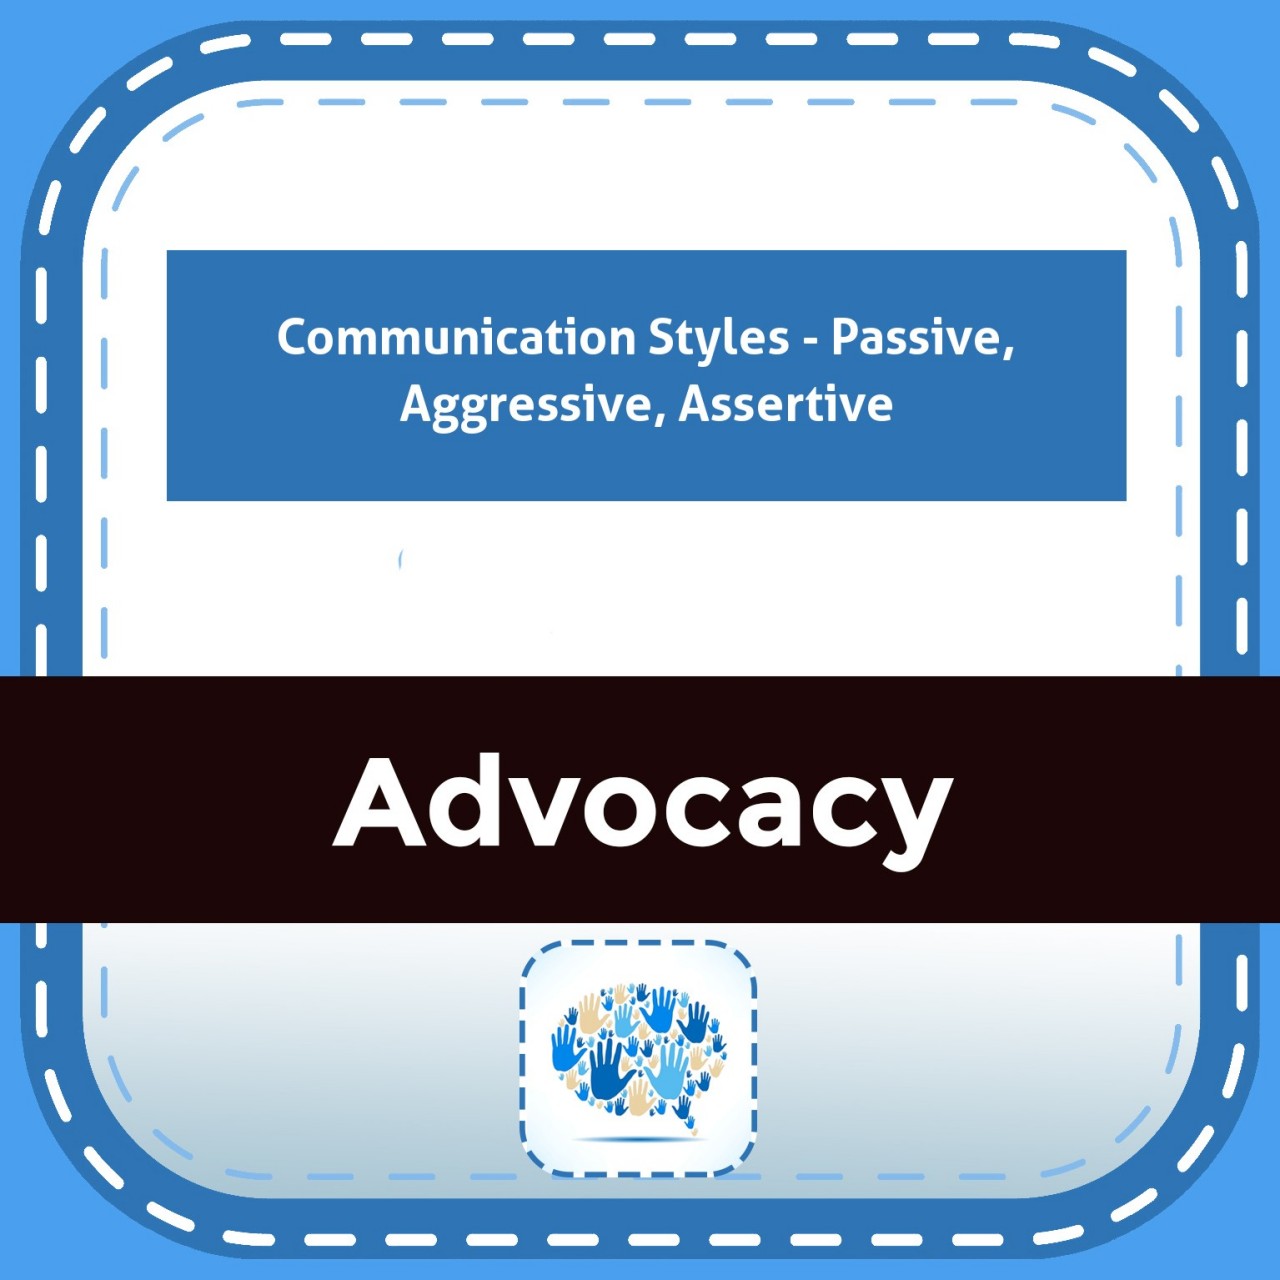 Communication Styles - Passive, Aggressive, Assertive